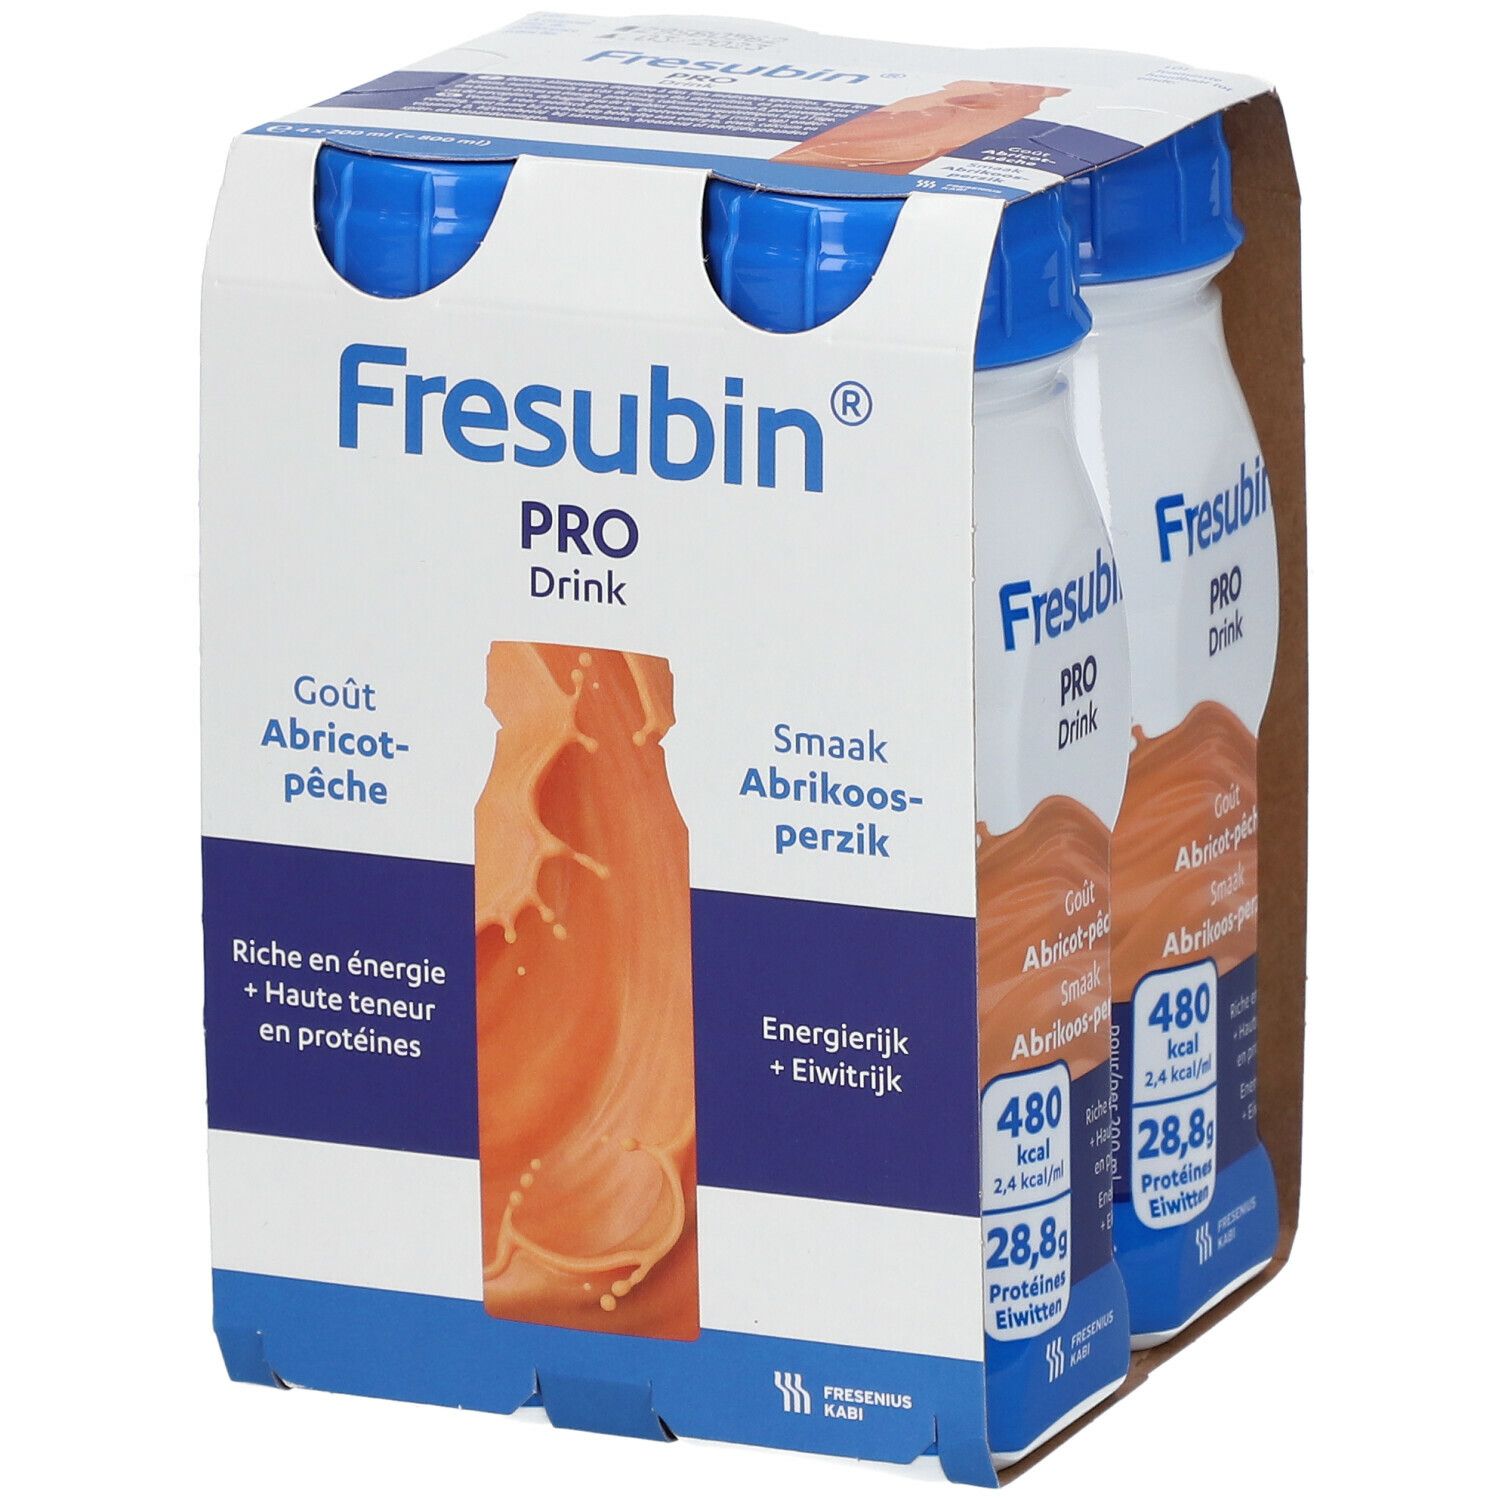 Fresubin® PRO Drink Abricot - Pêche